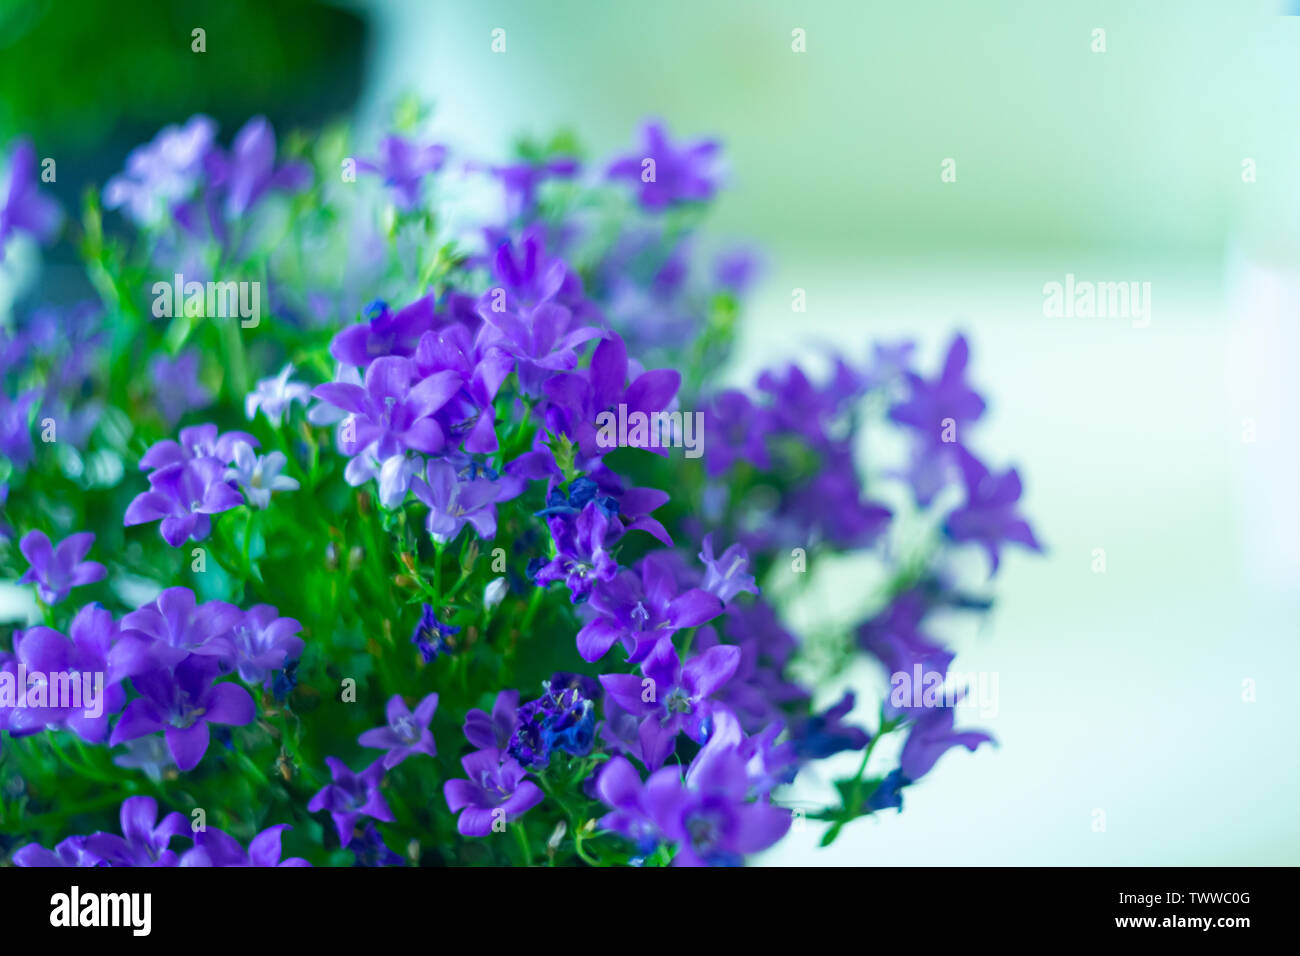 Blue flowers of  browallia speciosa in garden on blurred background Stock Photo